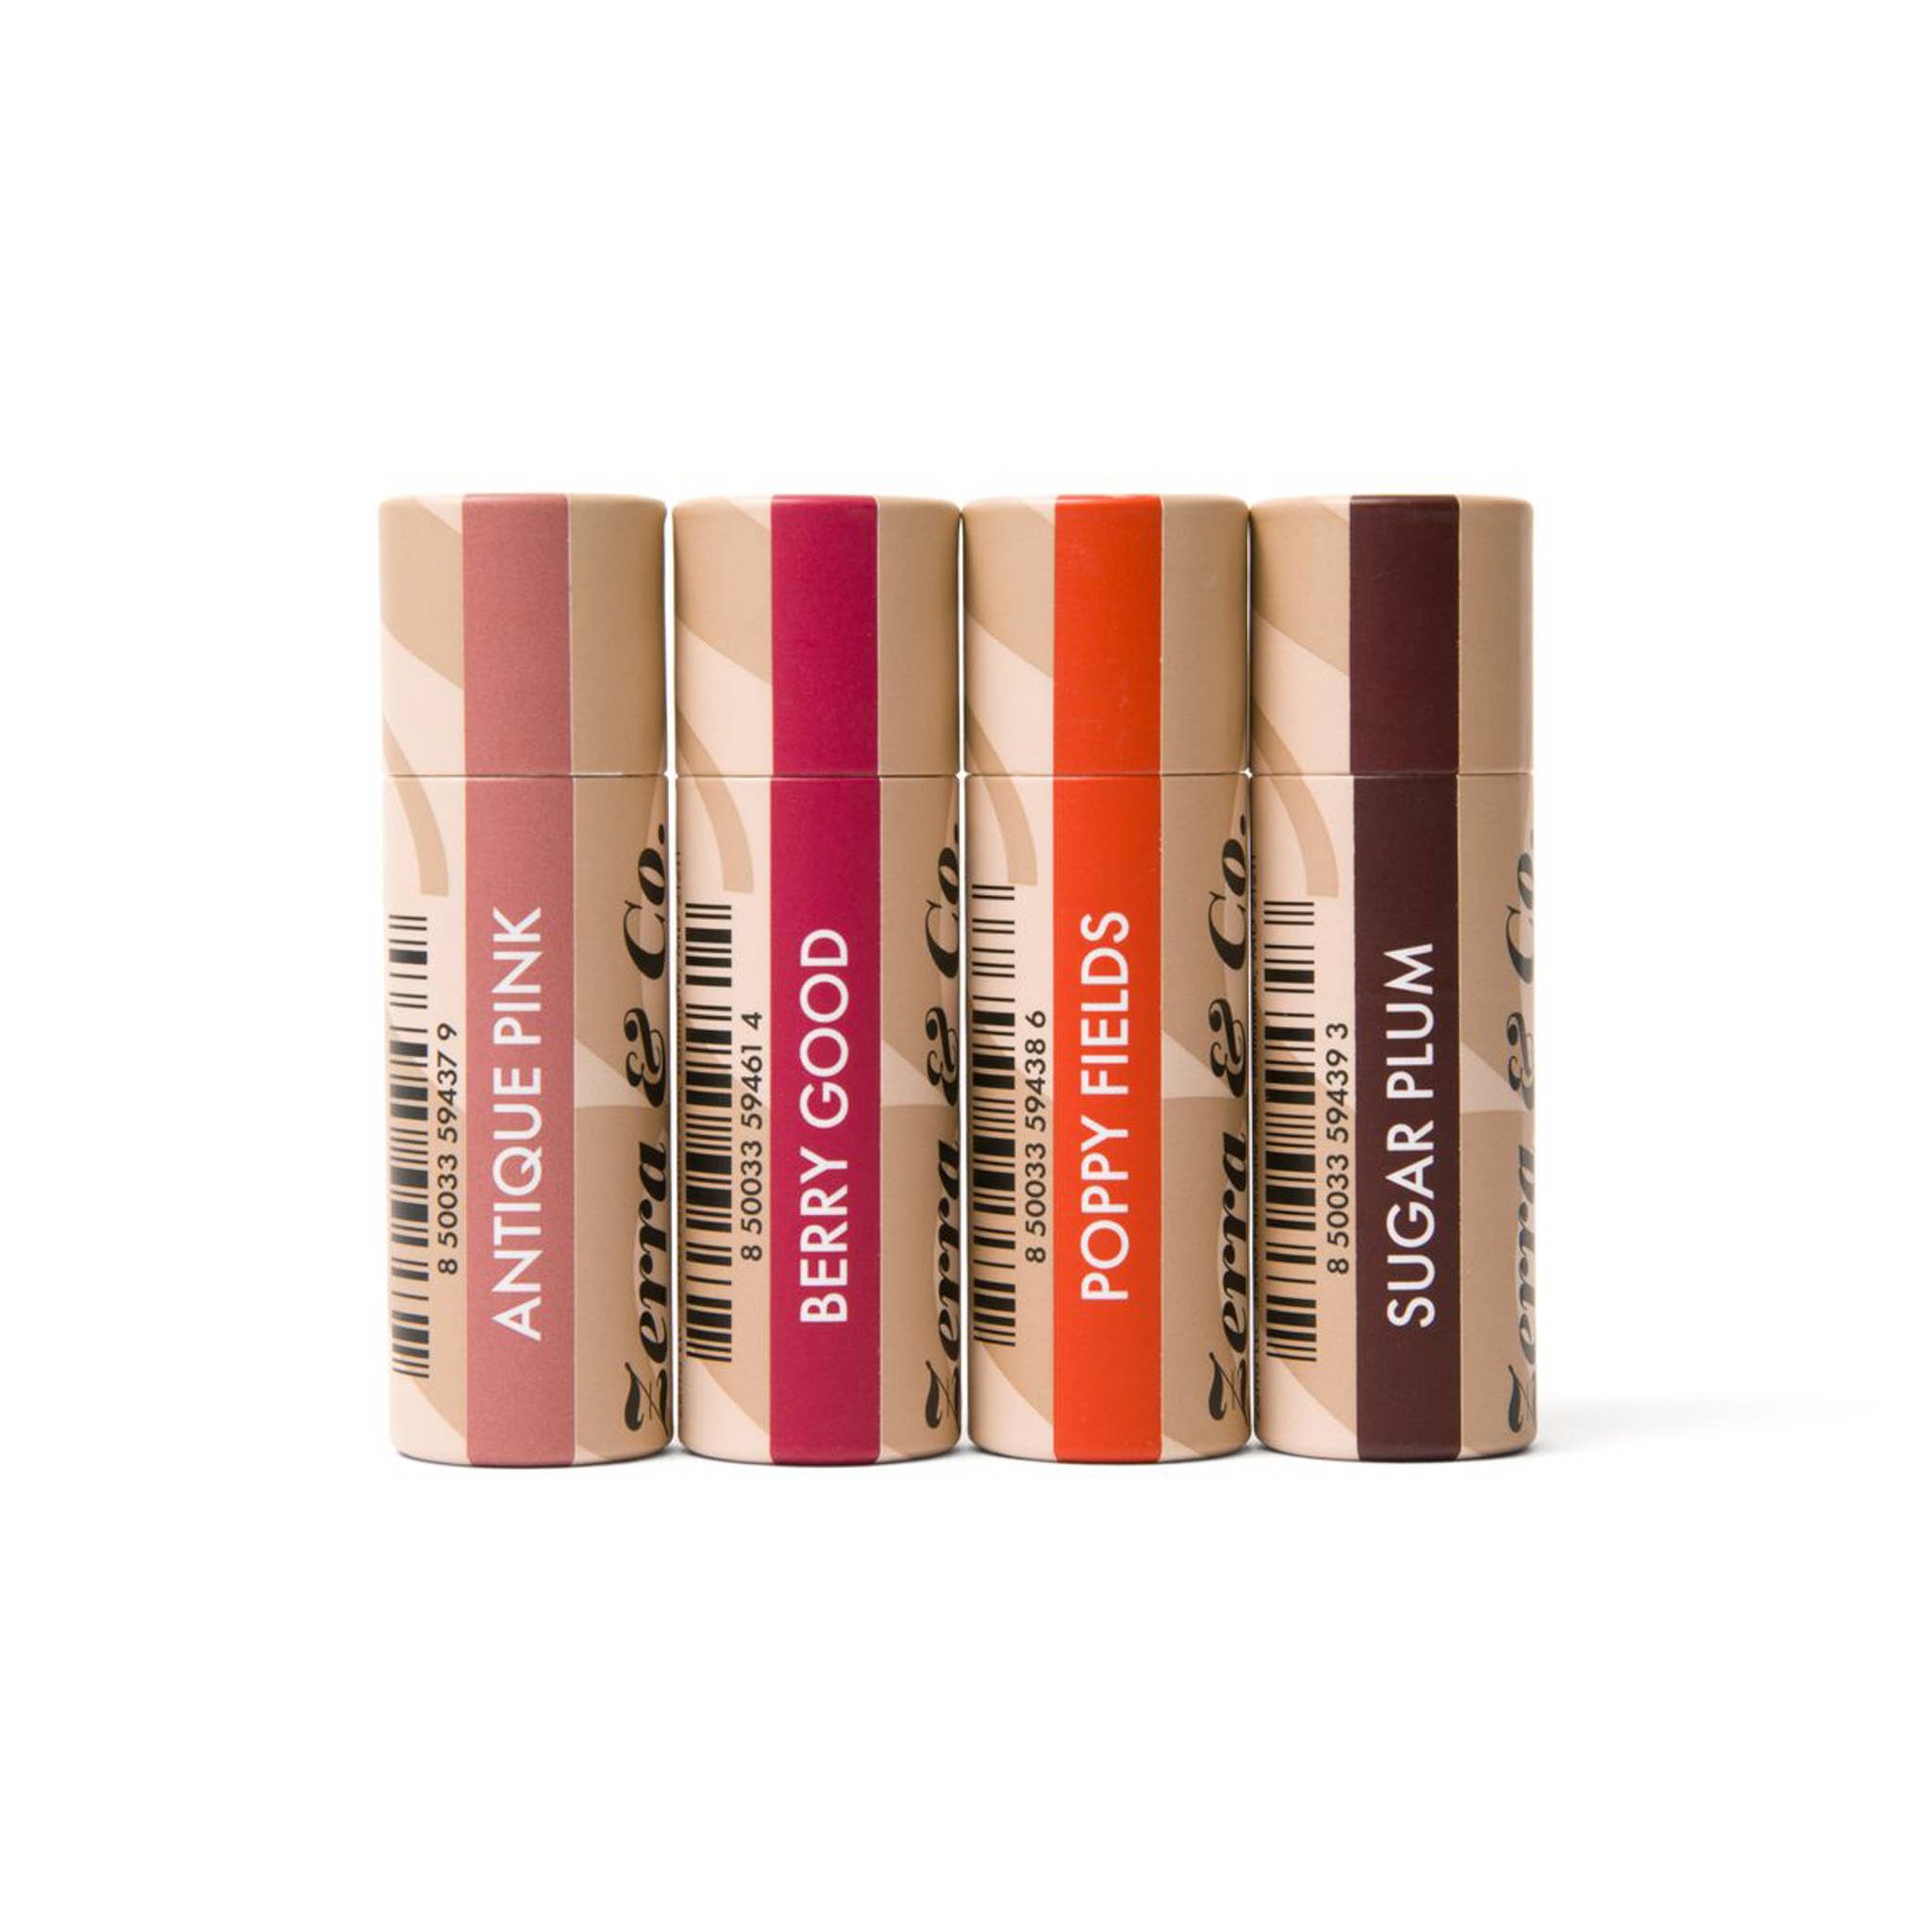 Zerra & Co.- Tinted Lip Balm